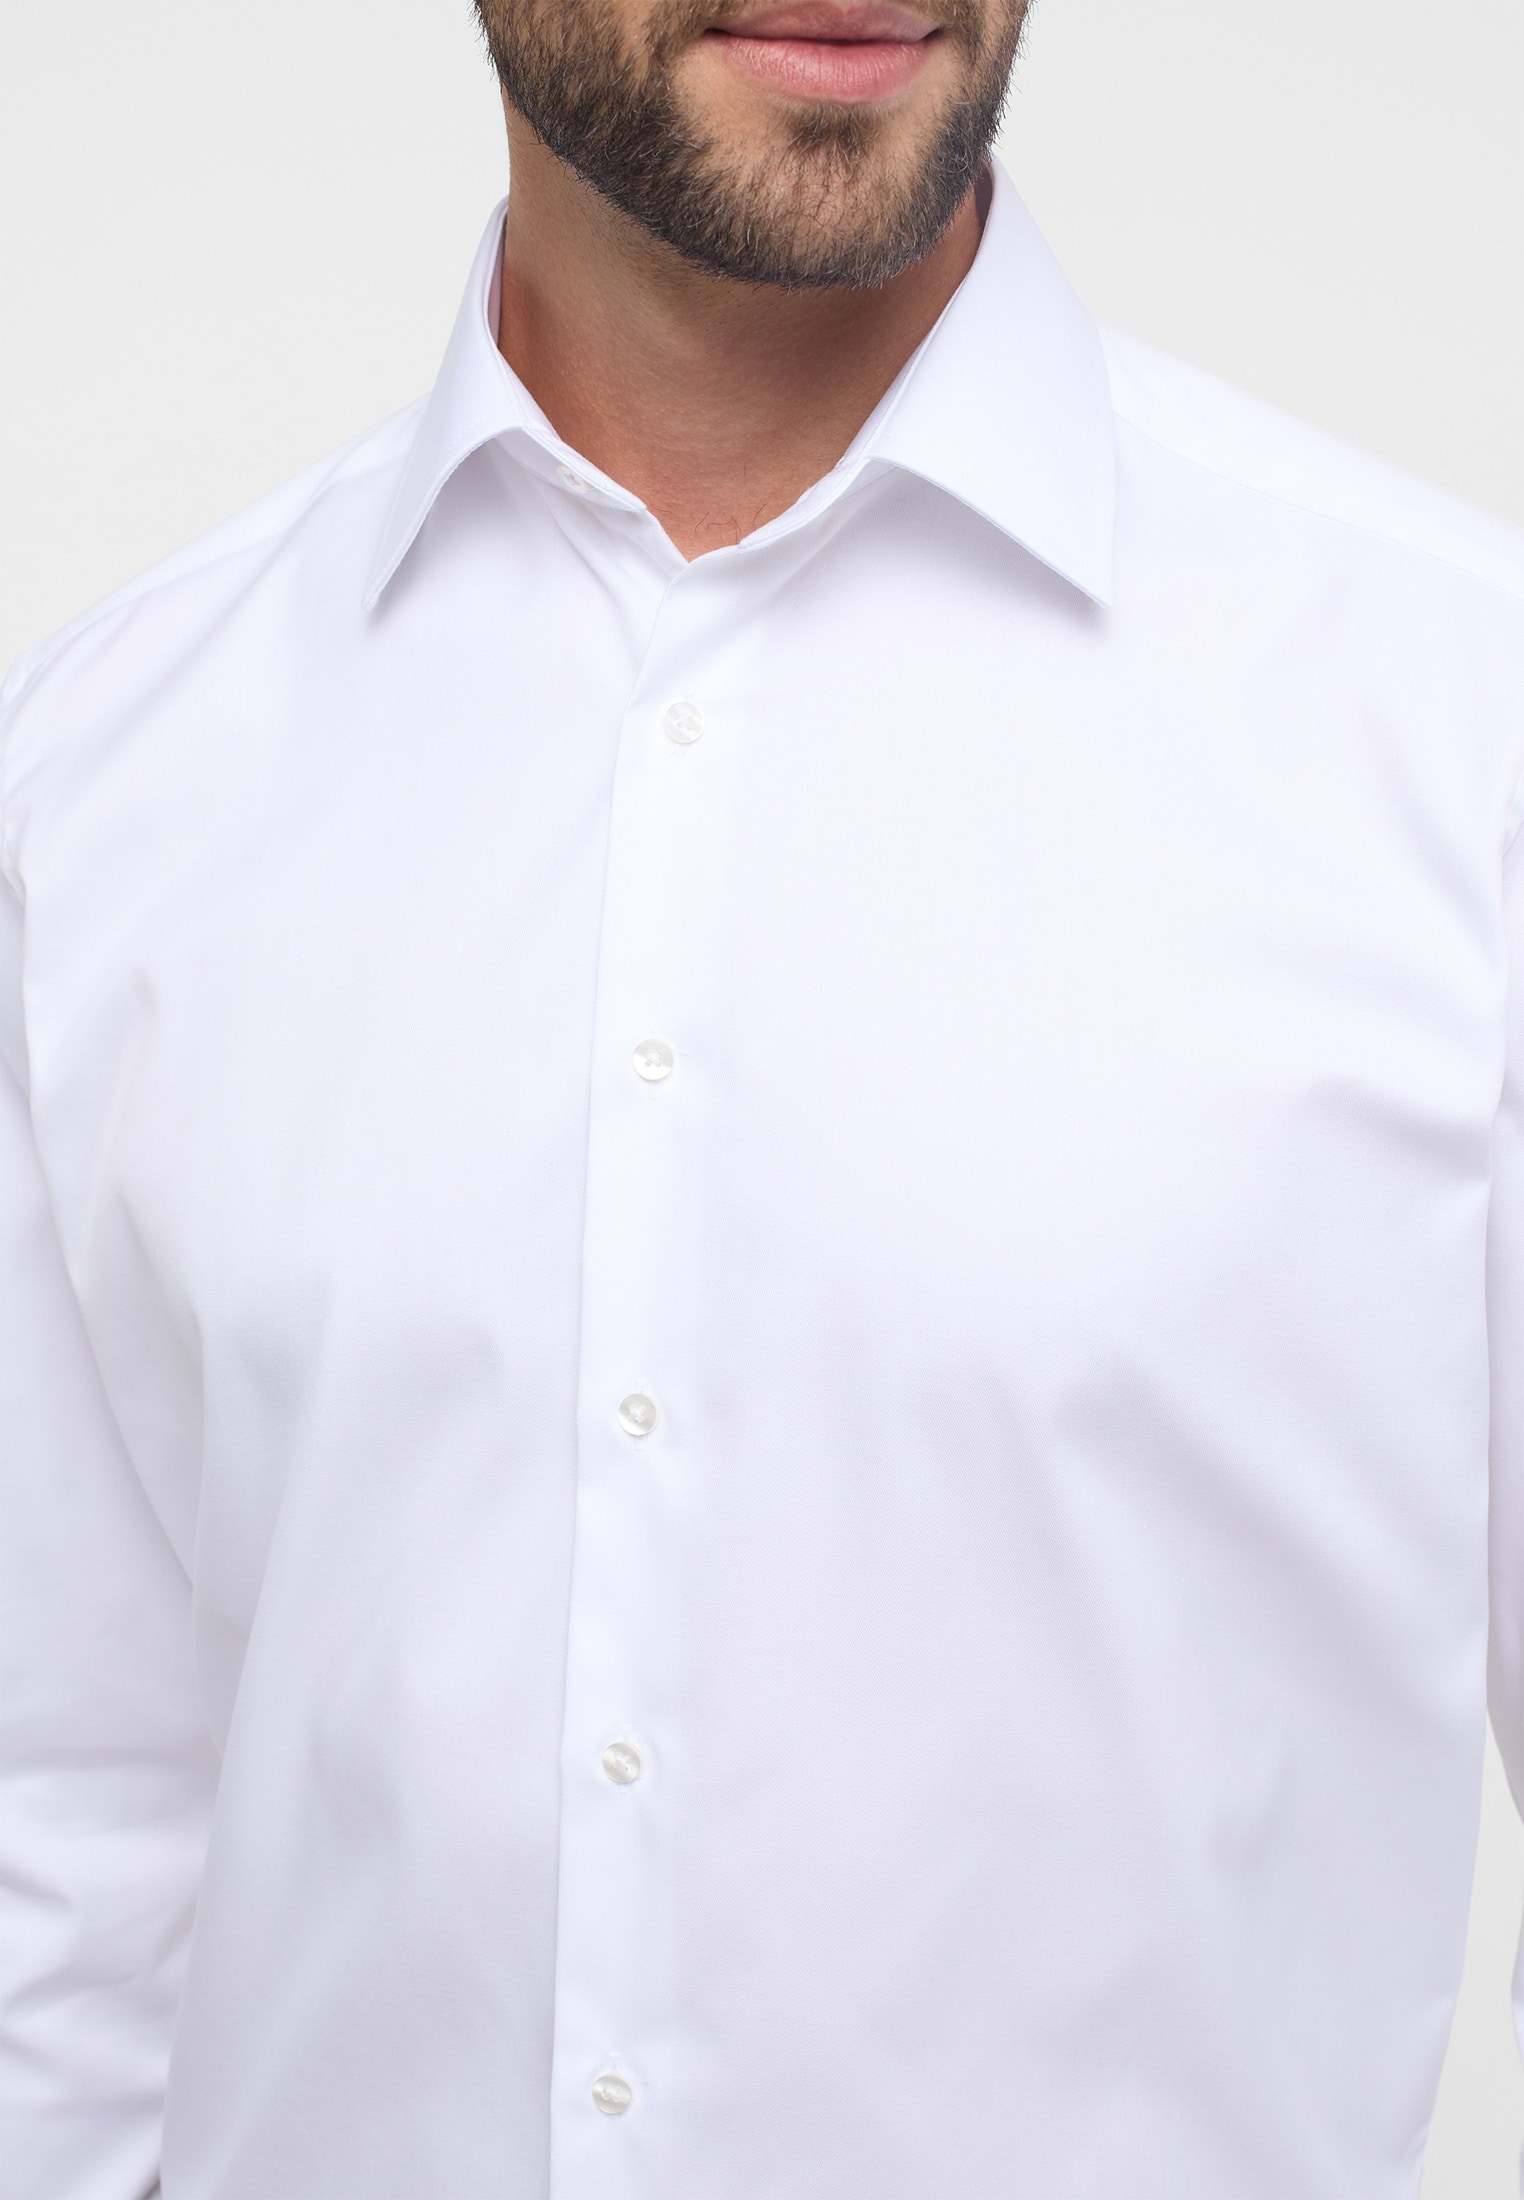 COMFORT FIT Cover Shirt in weiß unifarben | weiß | 41 | Langarm |  1SH05509-00-01-41-1/1